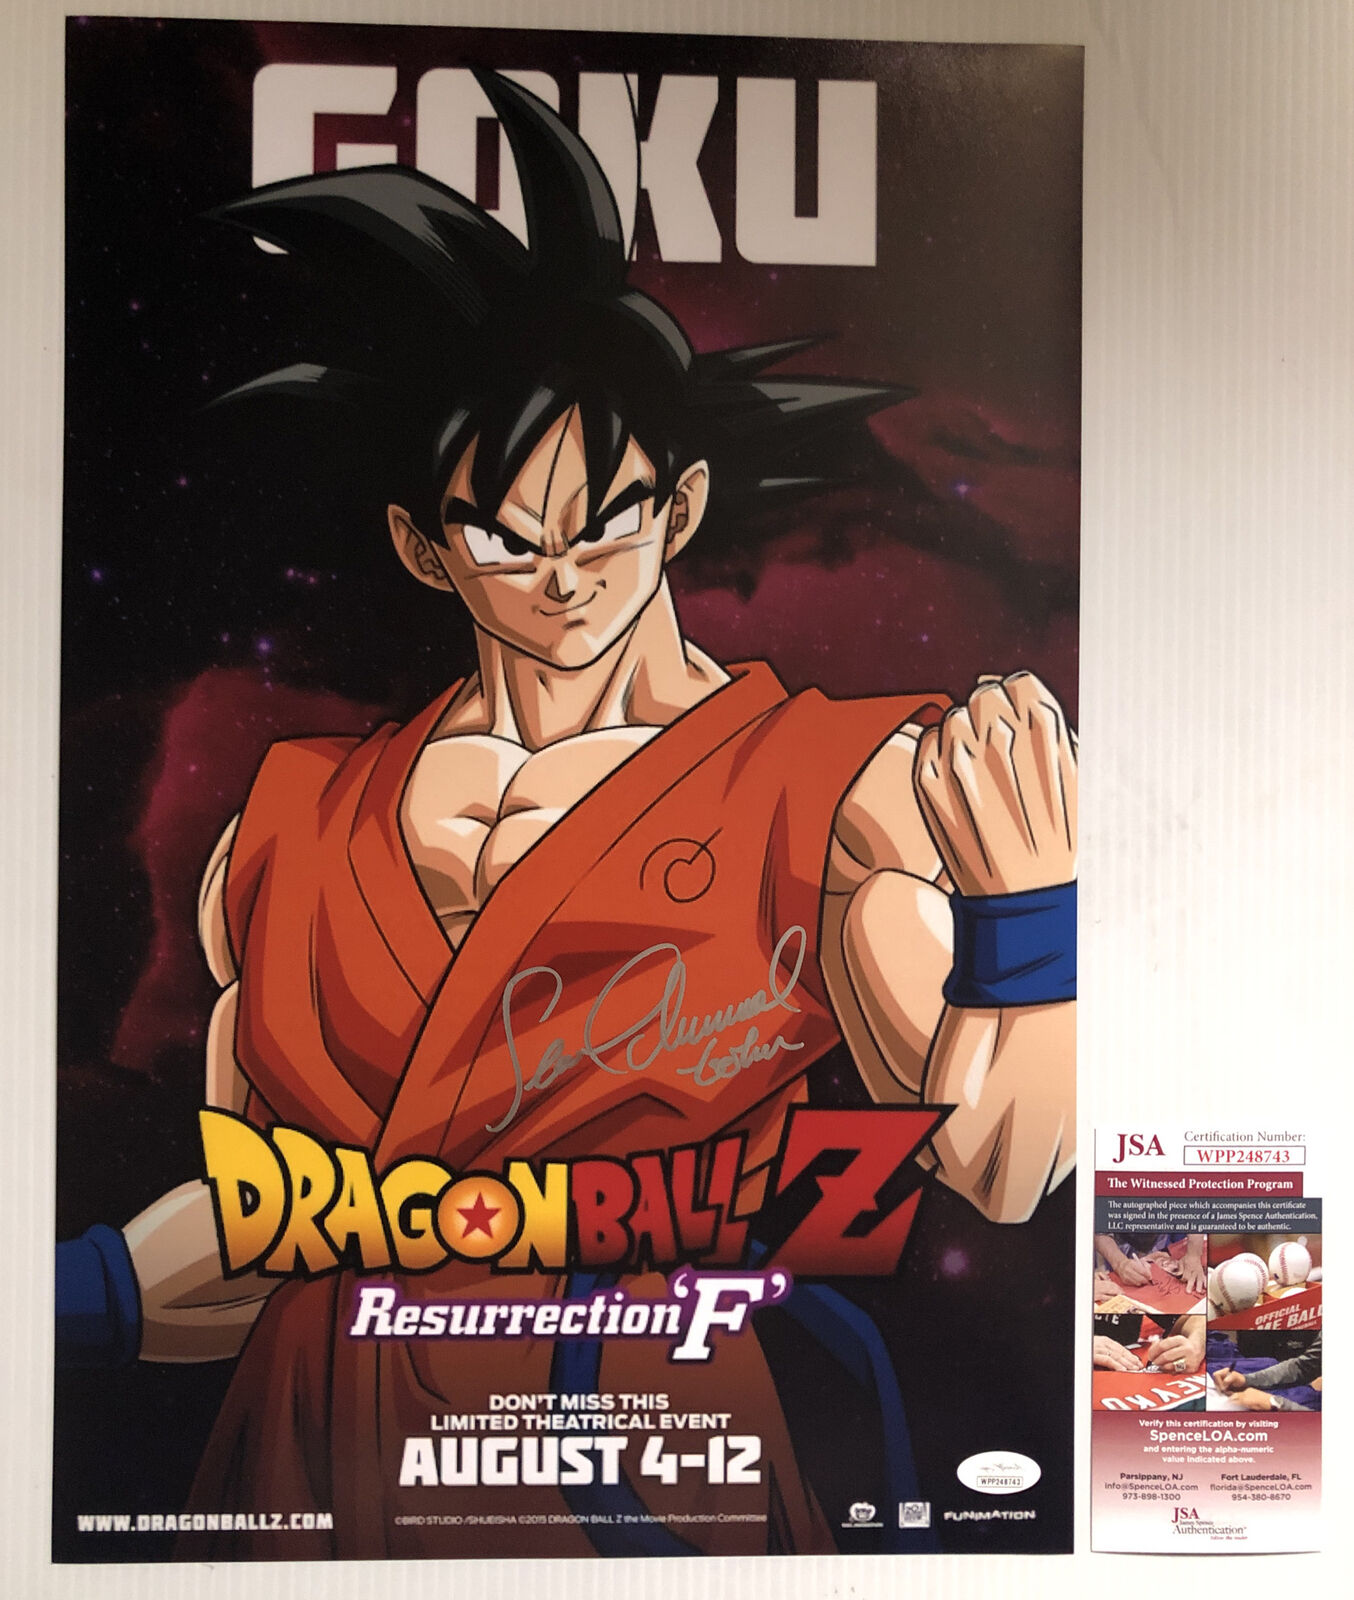 Sean Schemmel Signed Autographed 12x18 Photo Poster painting Dragon Ball Z Resurrection F JSA 1